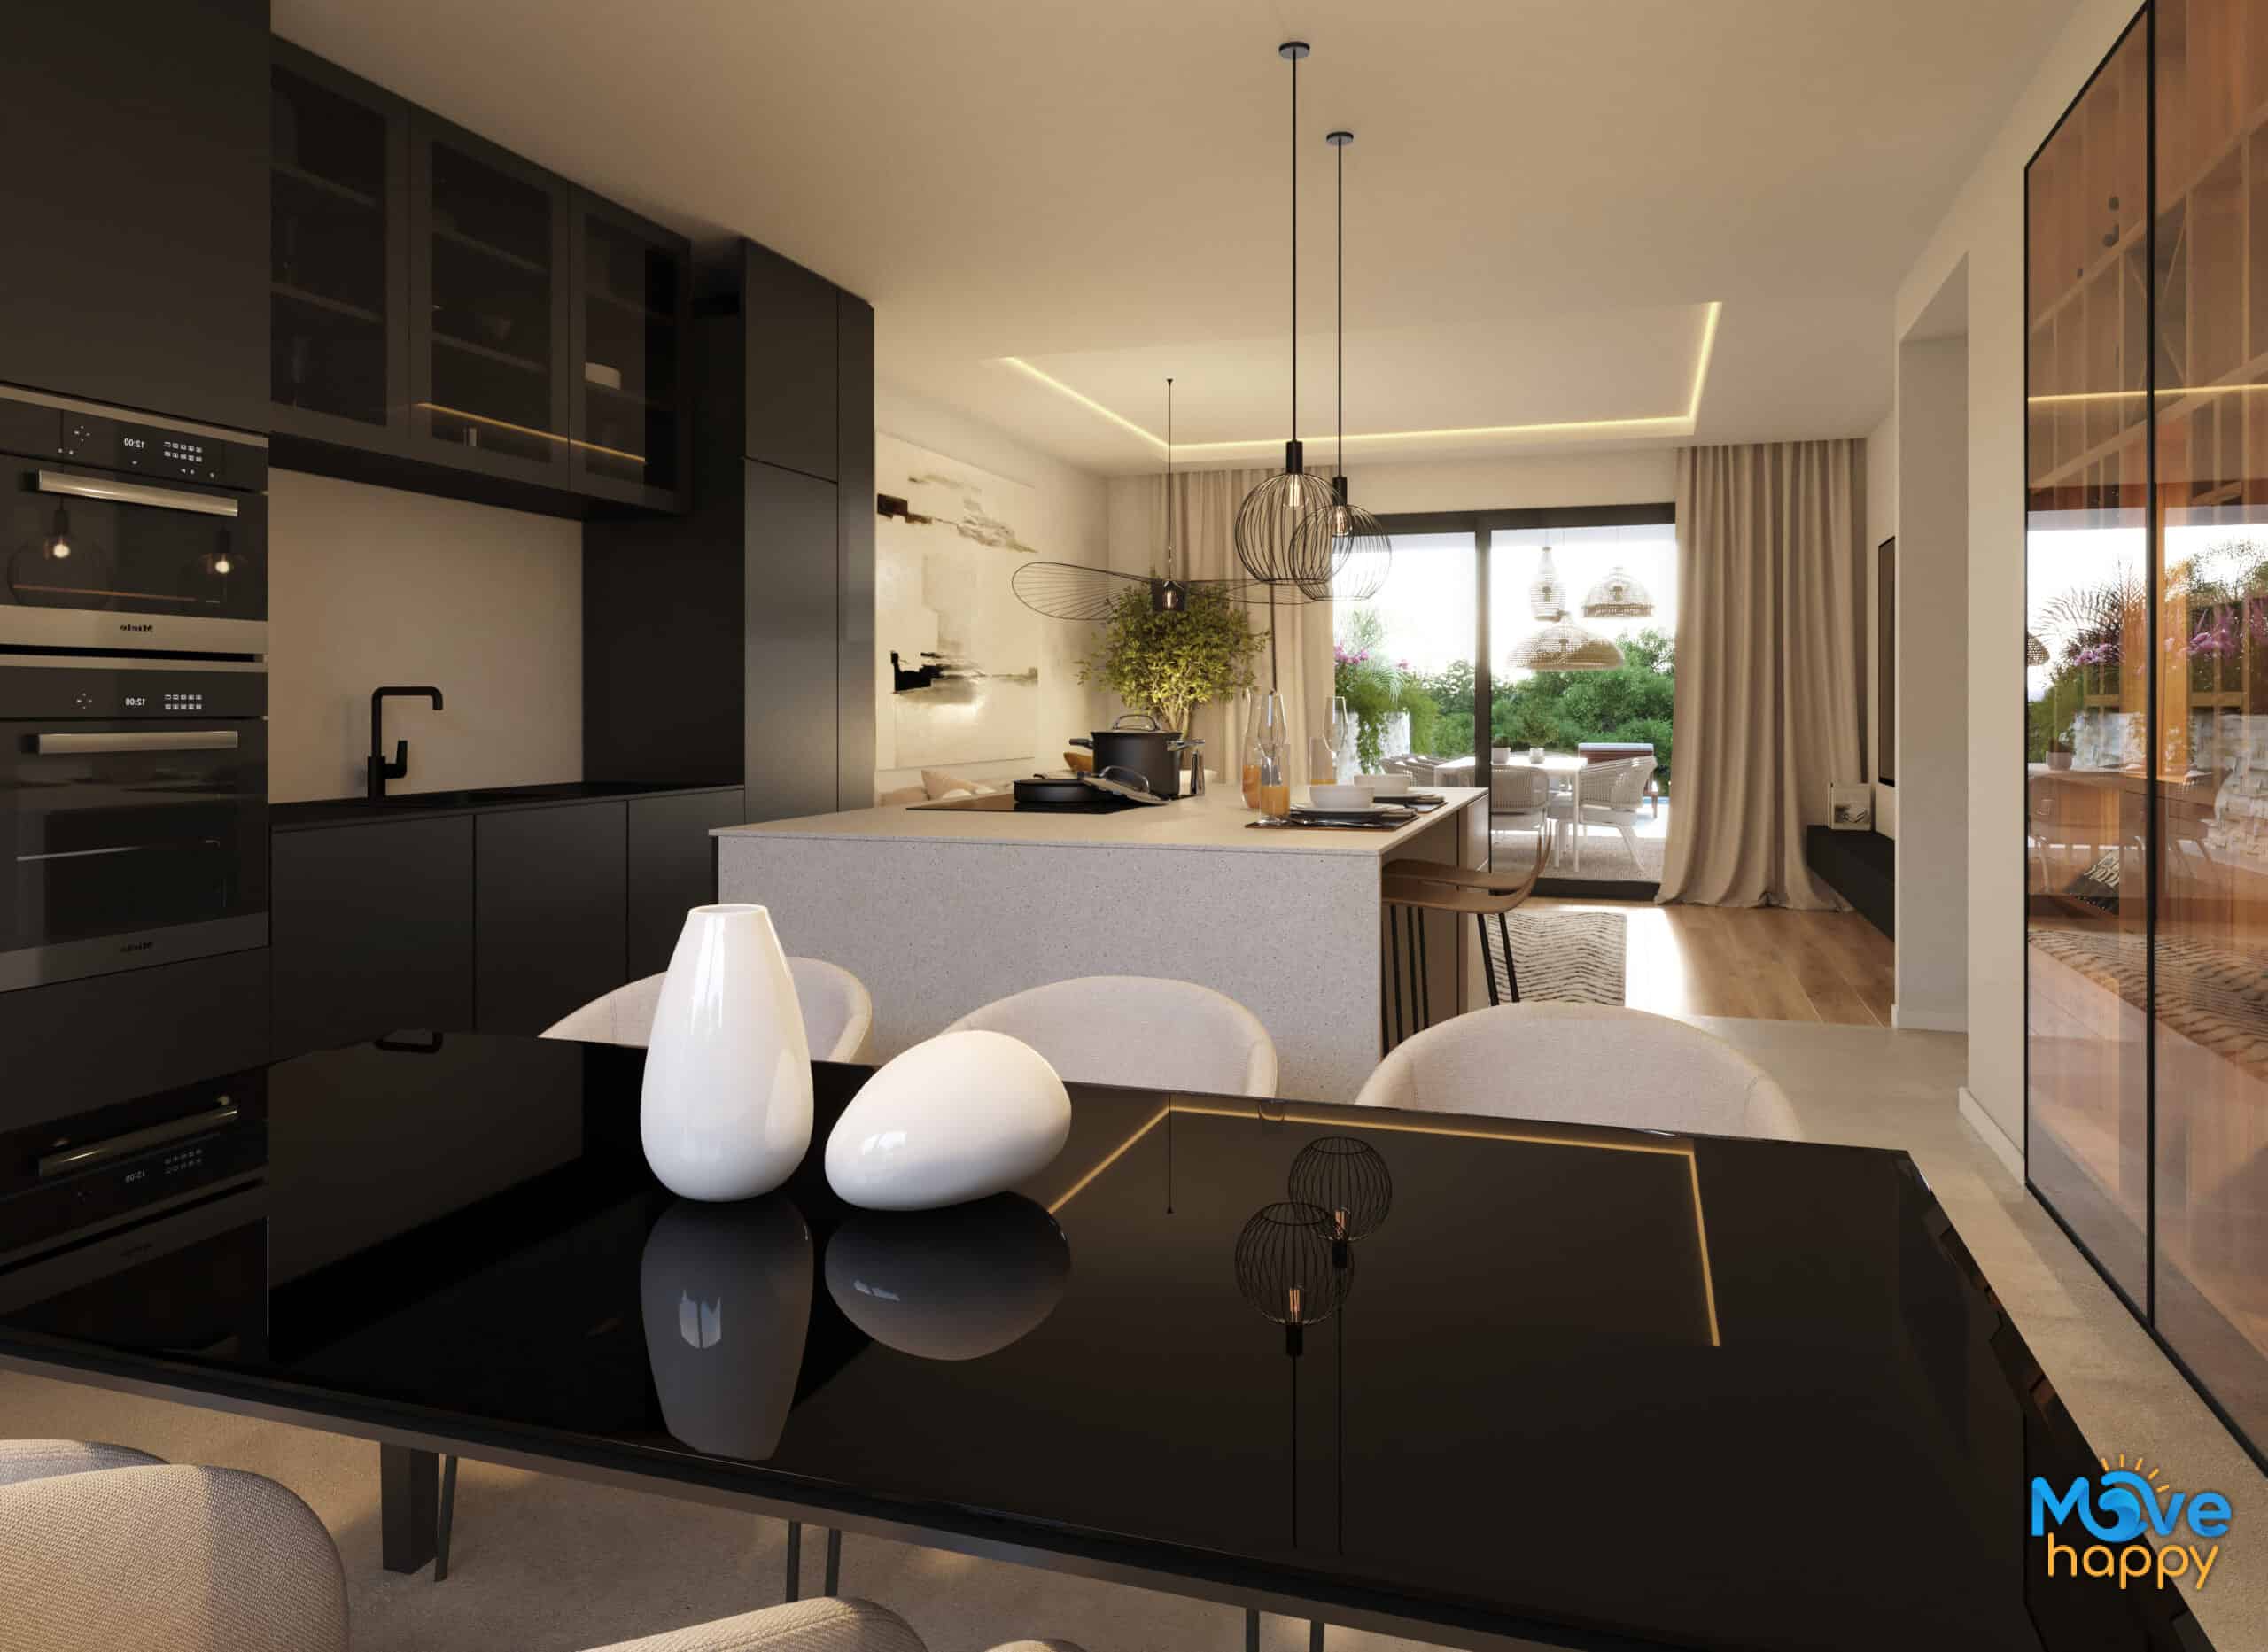 las-colinas-property-for-sale-3bed-3bath-ground-floor-limonero-apartment